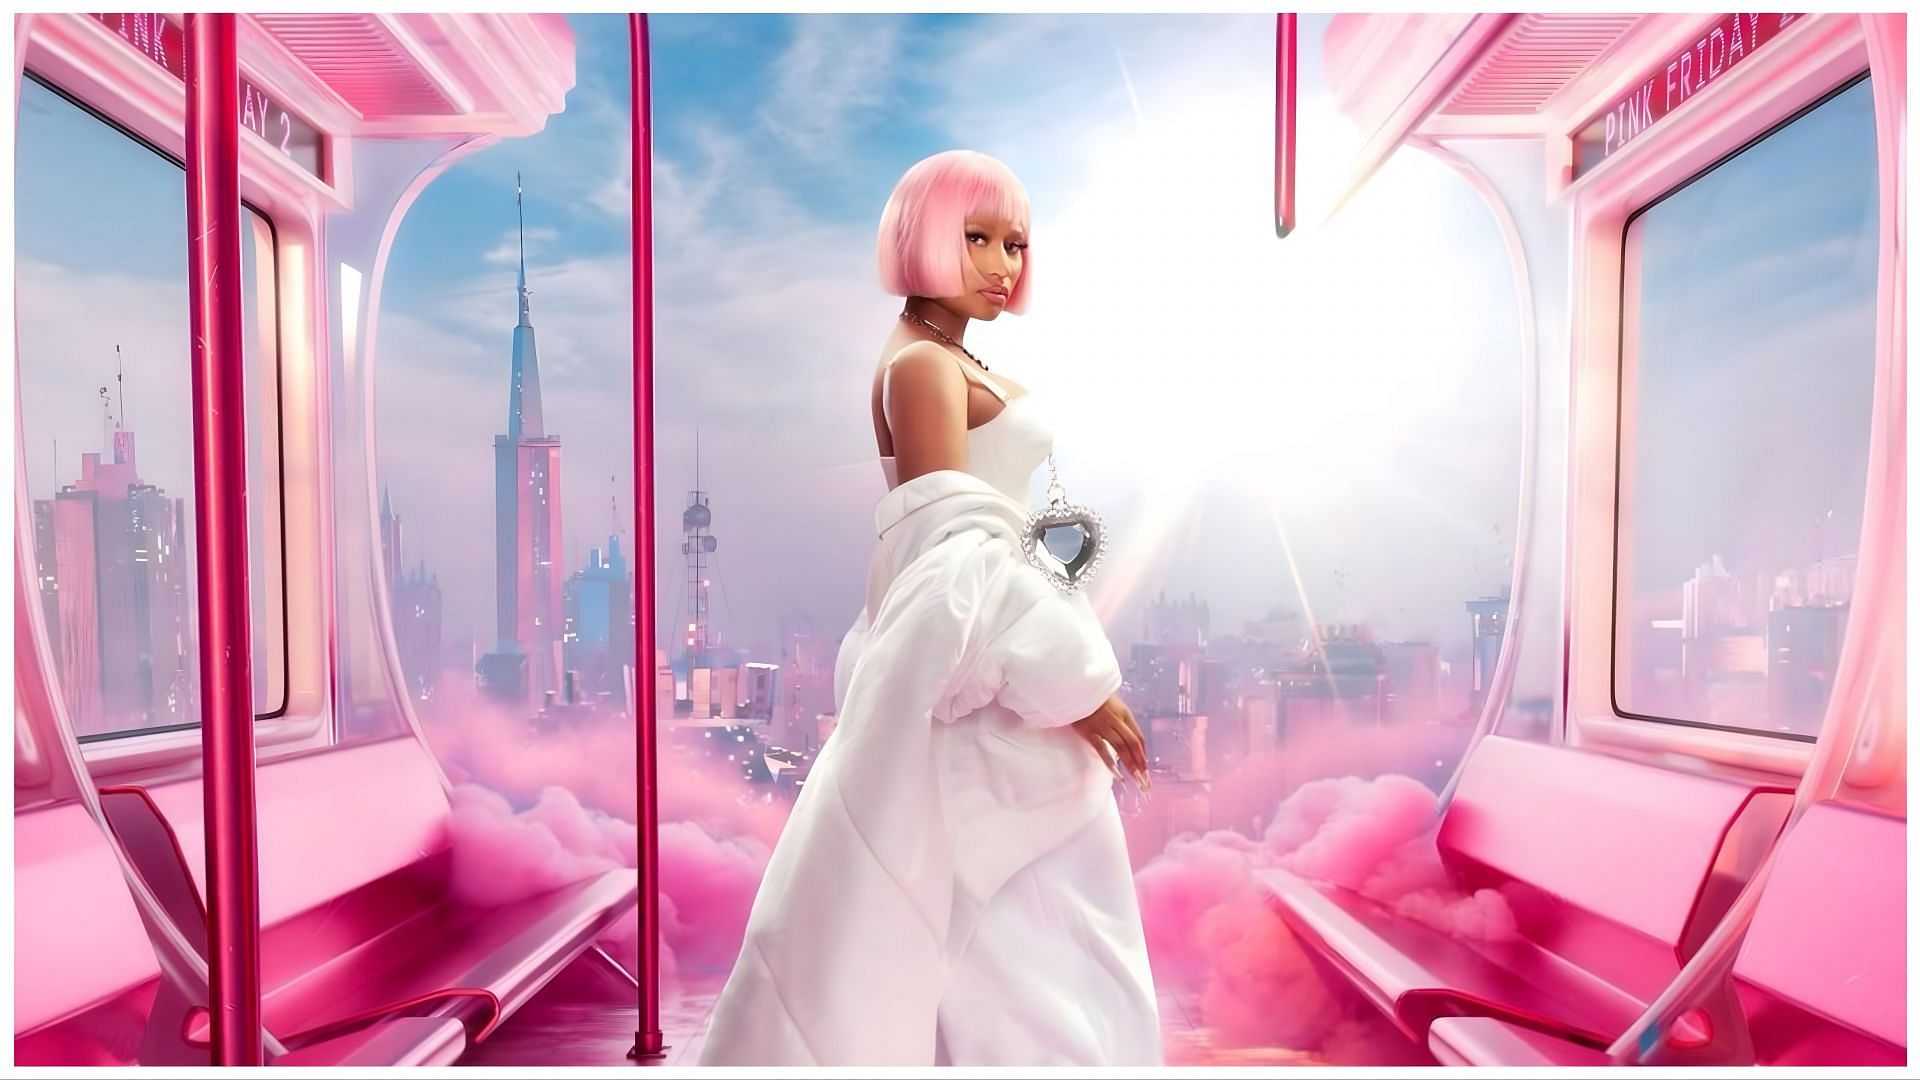 Nicki Minaj Pink Friday 2 World Tour Presale code, tickets, prices